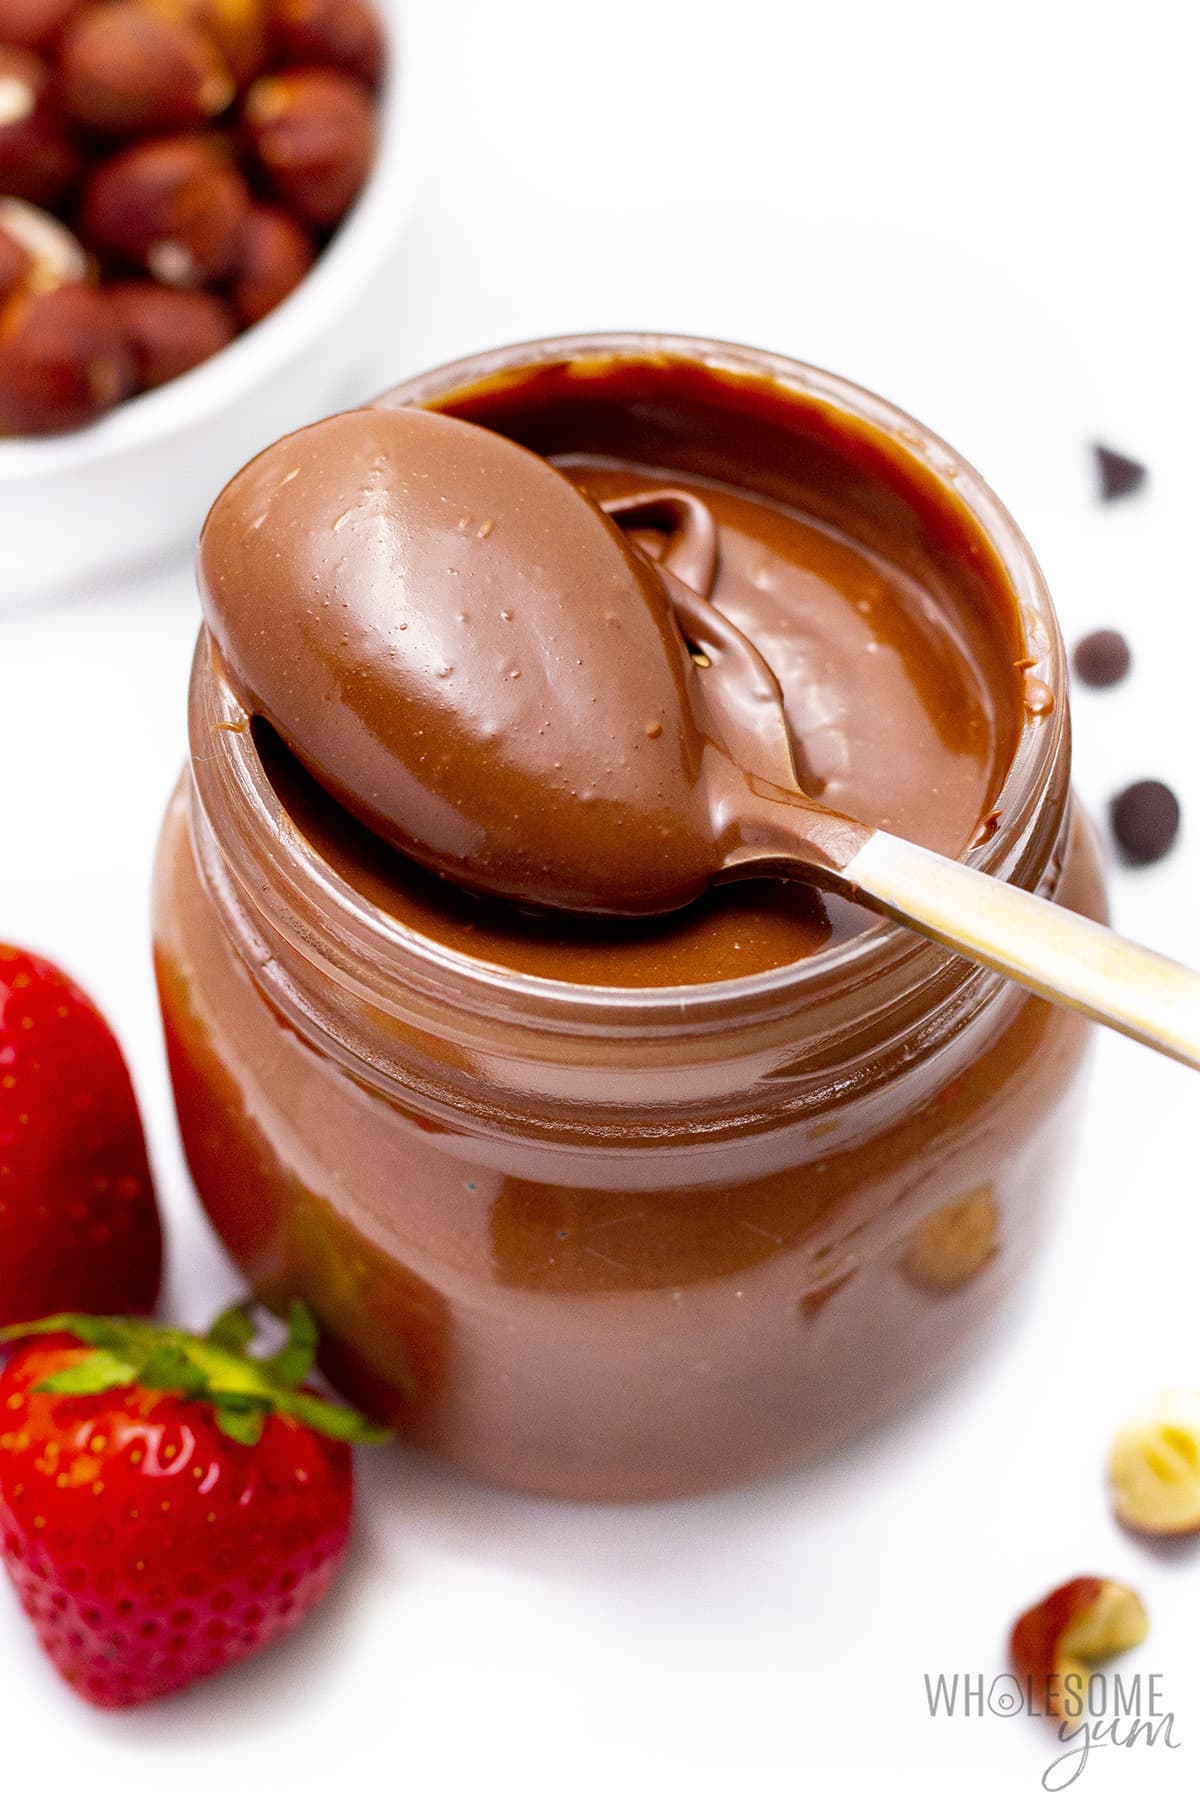 Sugar-free nutella with a spoon.